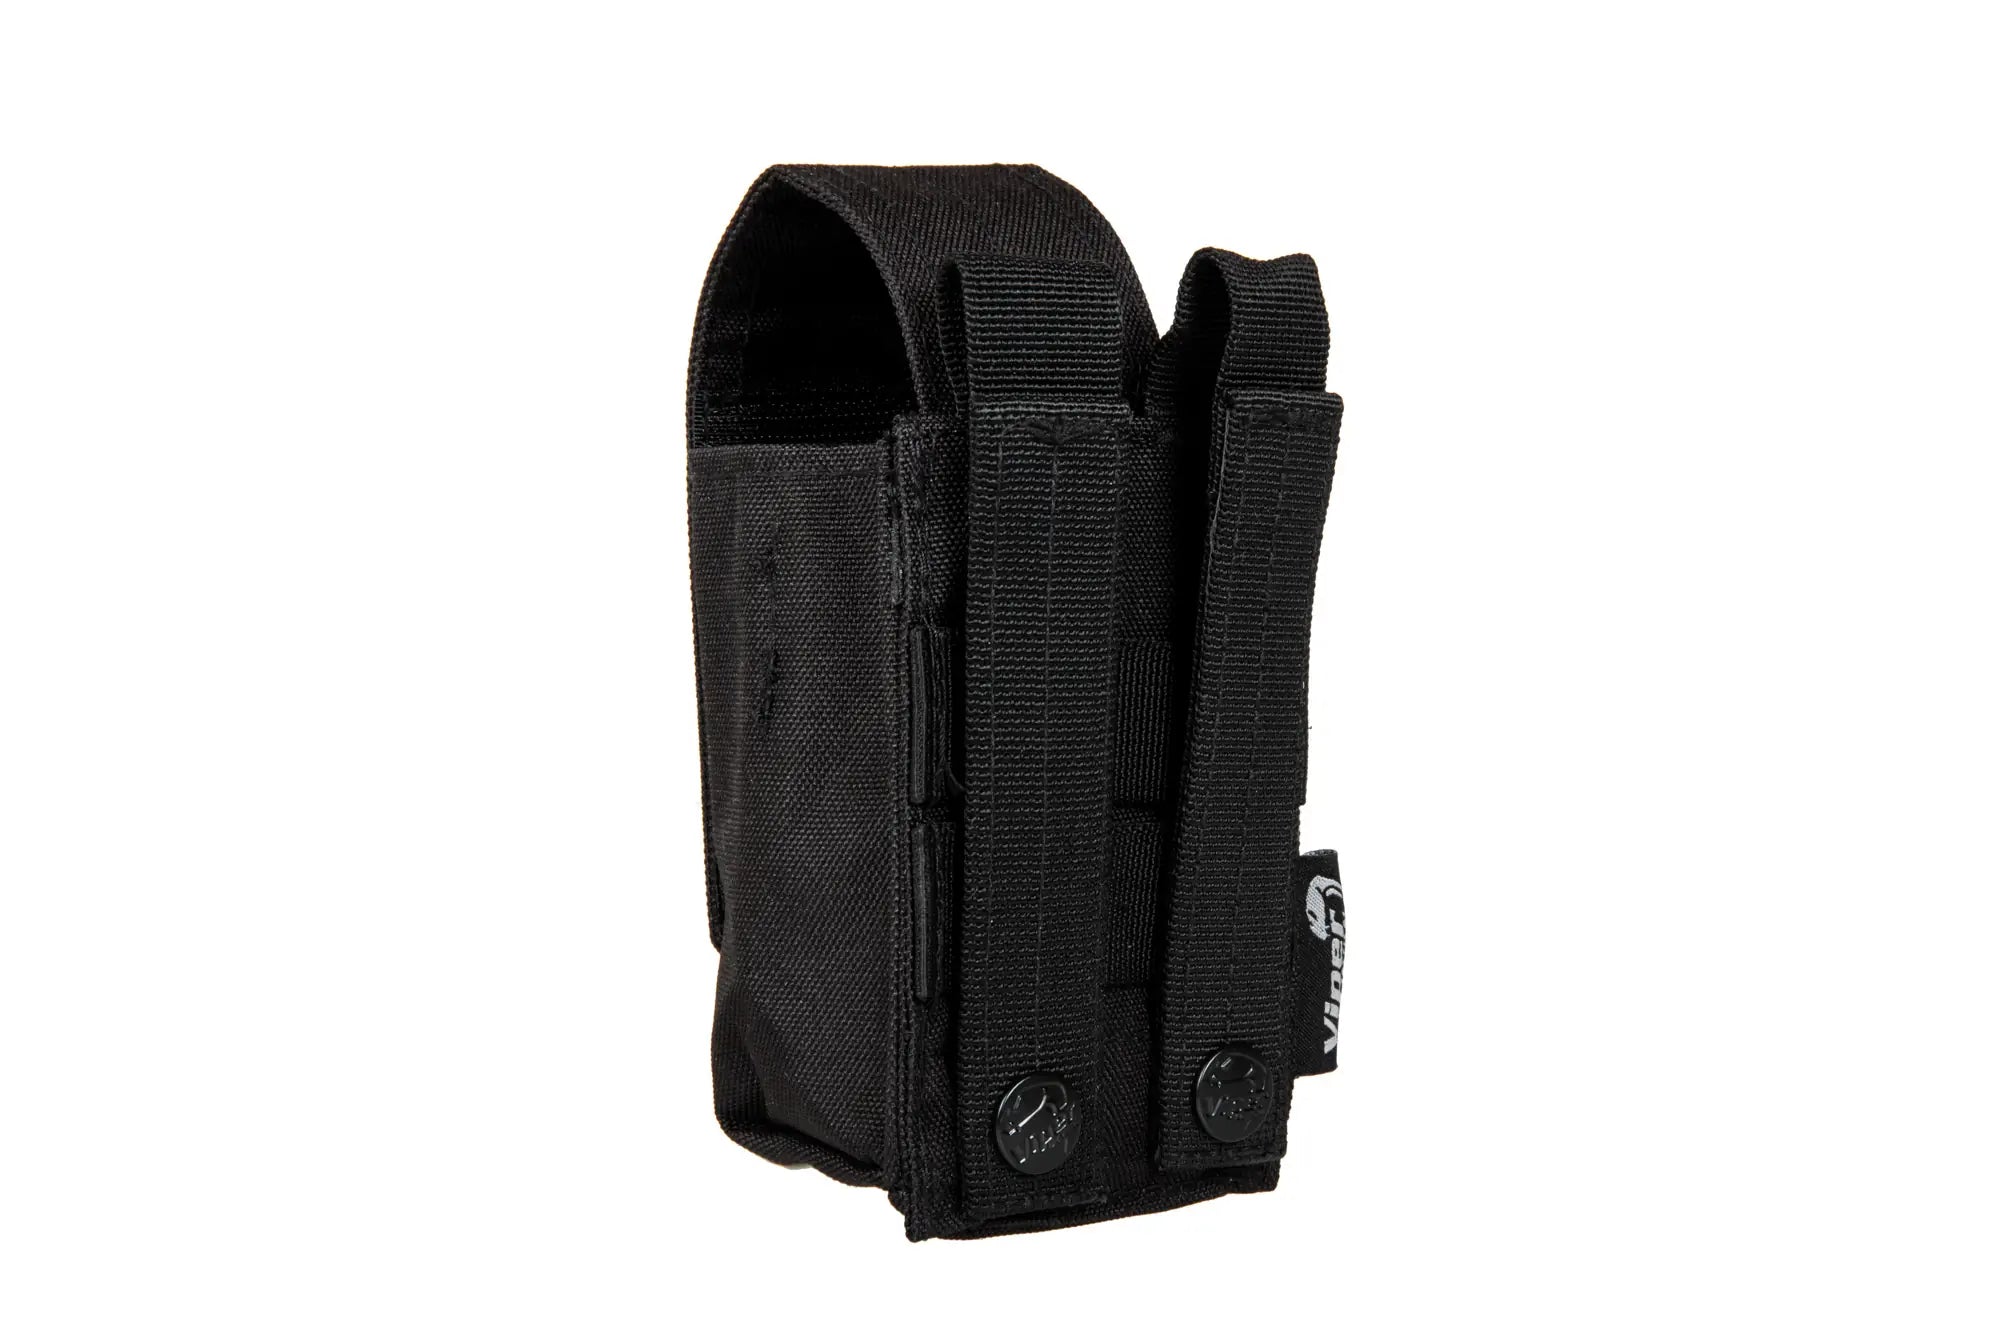 Grenade pouch - Black-5